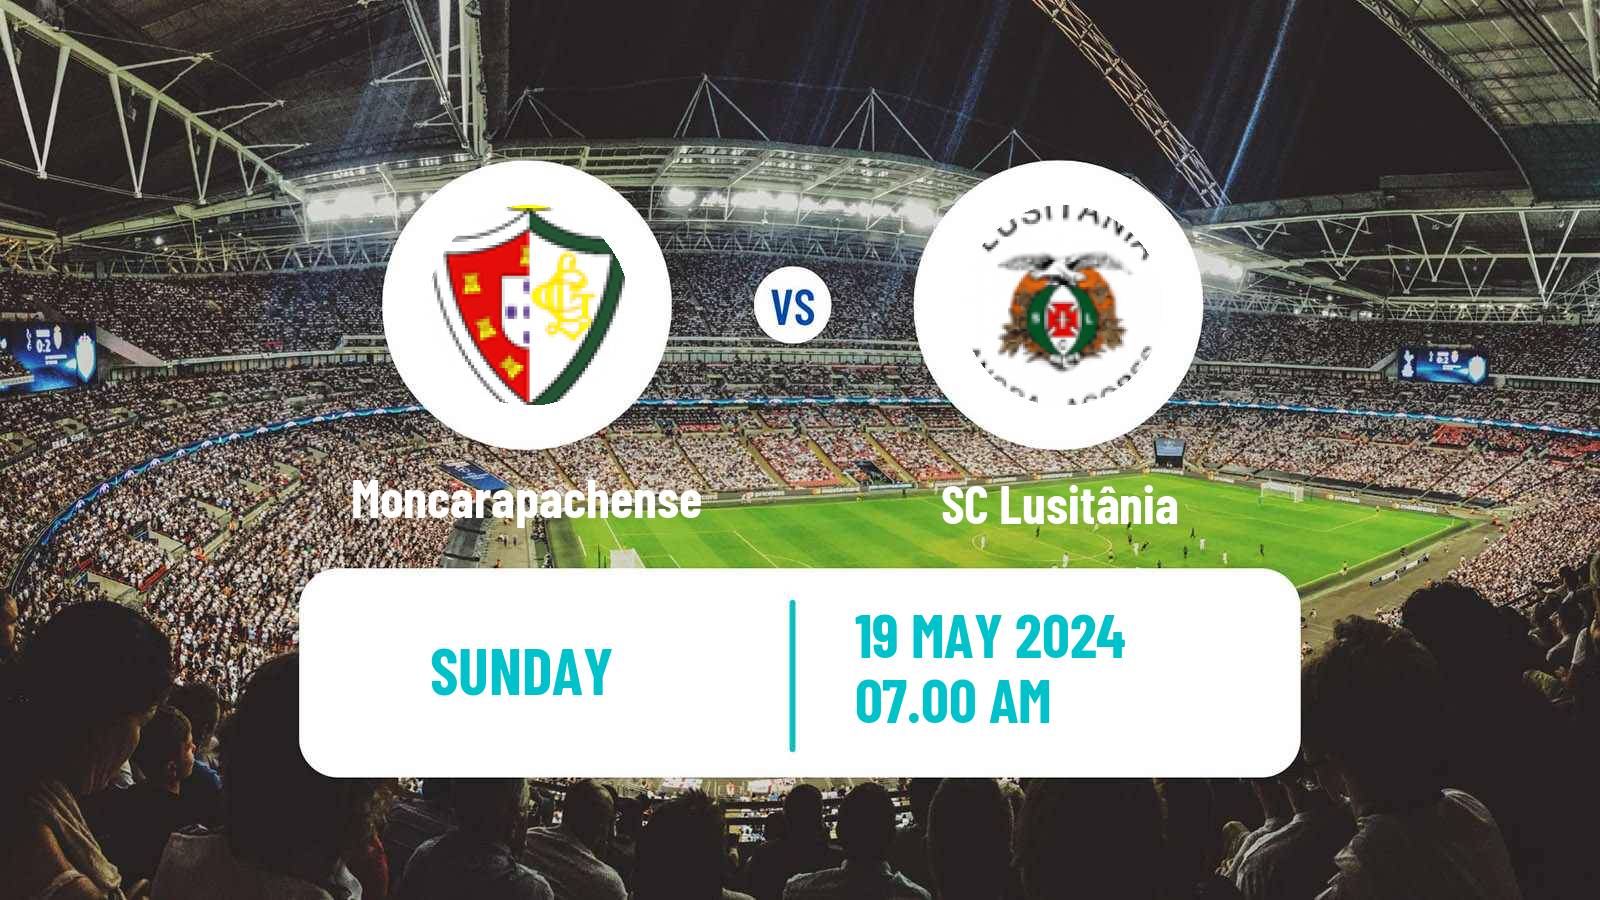 Soccer Campeonato de Portugal Promotion Group Moncarapachense - SC Lusitânia